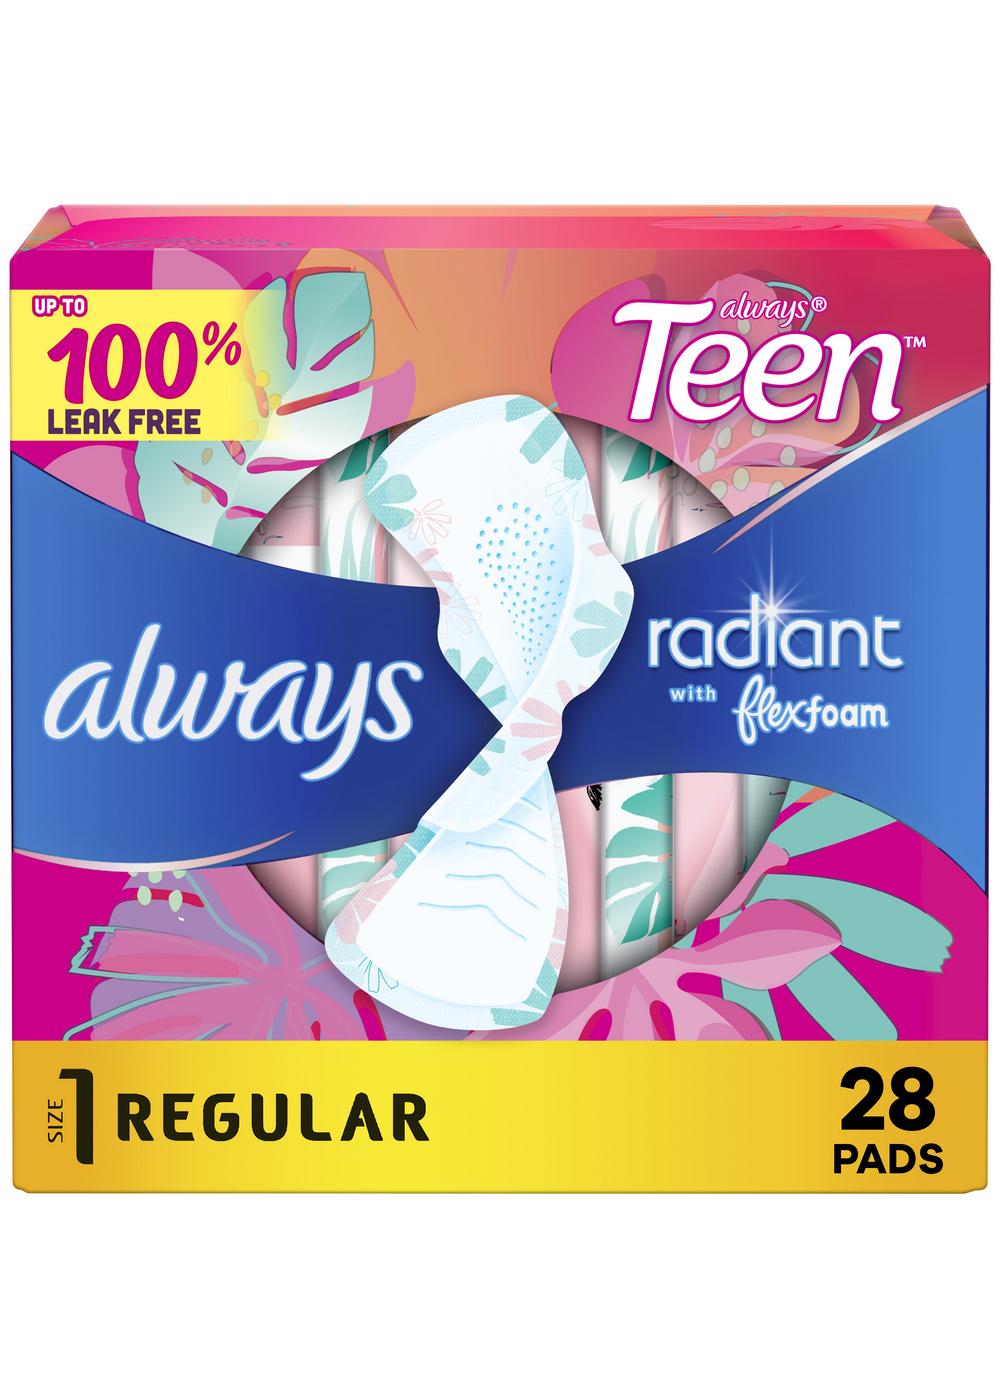 Always Teen Radiant FlexFoam Size 1 Regular Pads; image 1 of 6